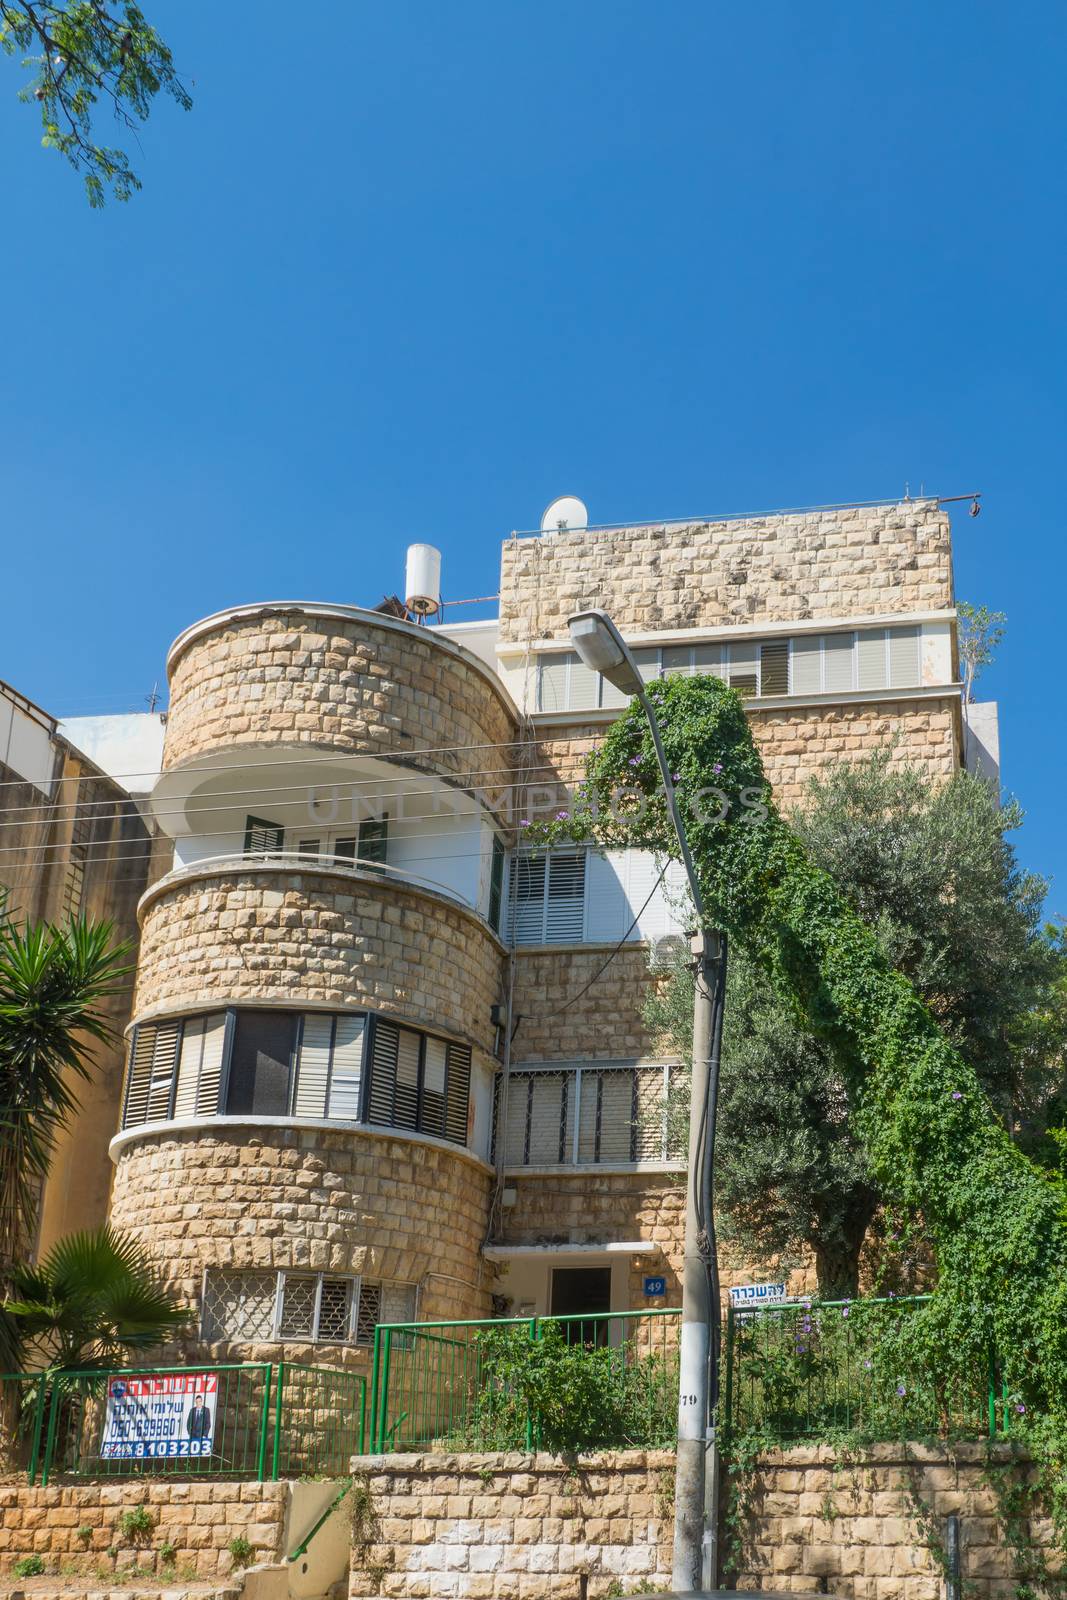 HAIFA, ISRAEL - JUNE 09, 2018: Buildings with a mixture of international (Bauhaus) and Arabic styles, in Hadar HaCarmel neighborhood, Haifa, Israel